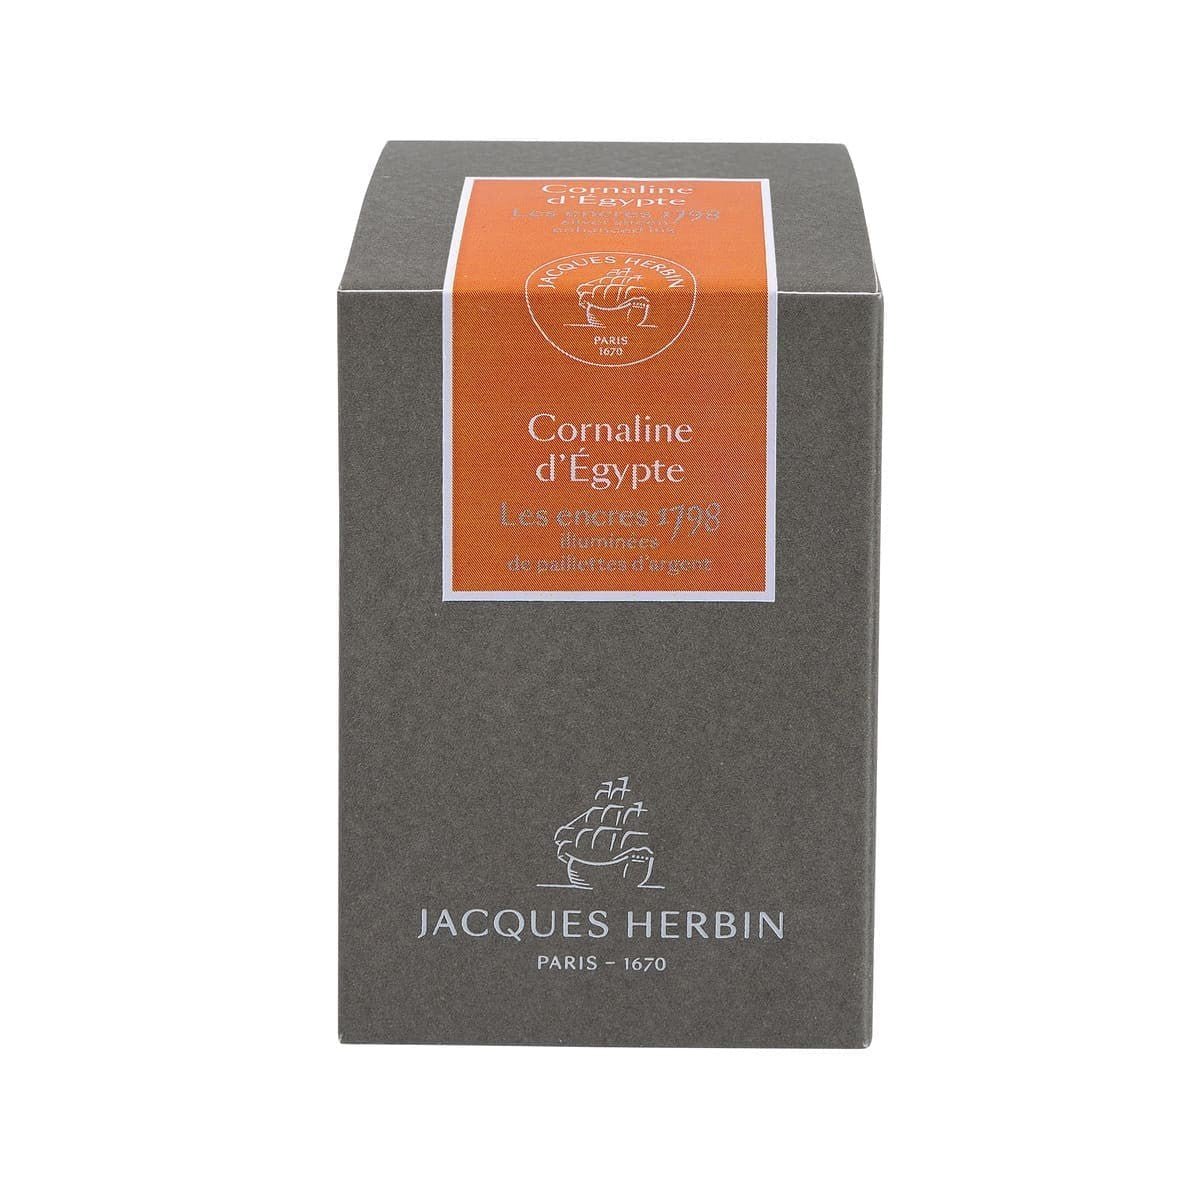 Bläckflaska J. HERBIN INK 50 ml - Cornaline d'Egypte (Carnelian of Egypt) - Herbin - Tidformera